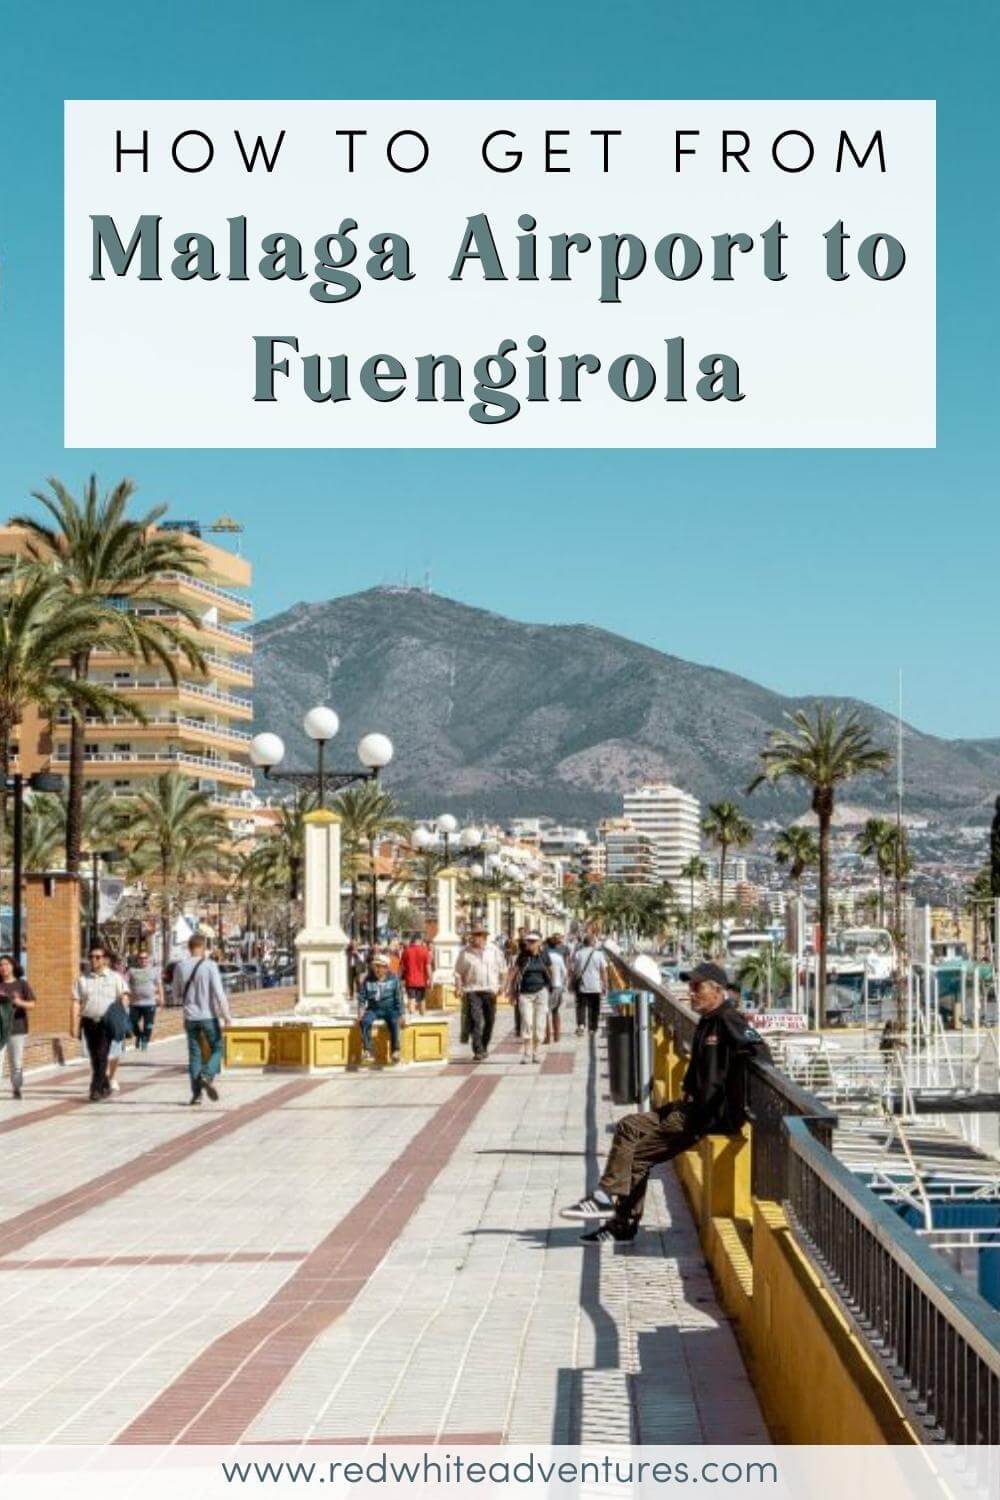 Malaga Airport to Fuengirola pin for Pinterest.